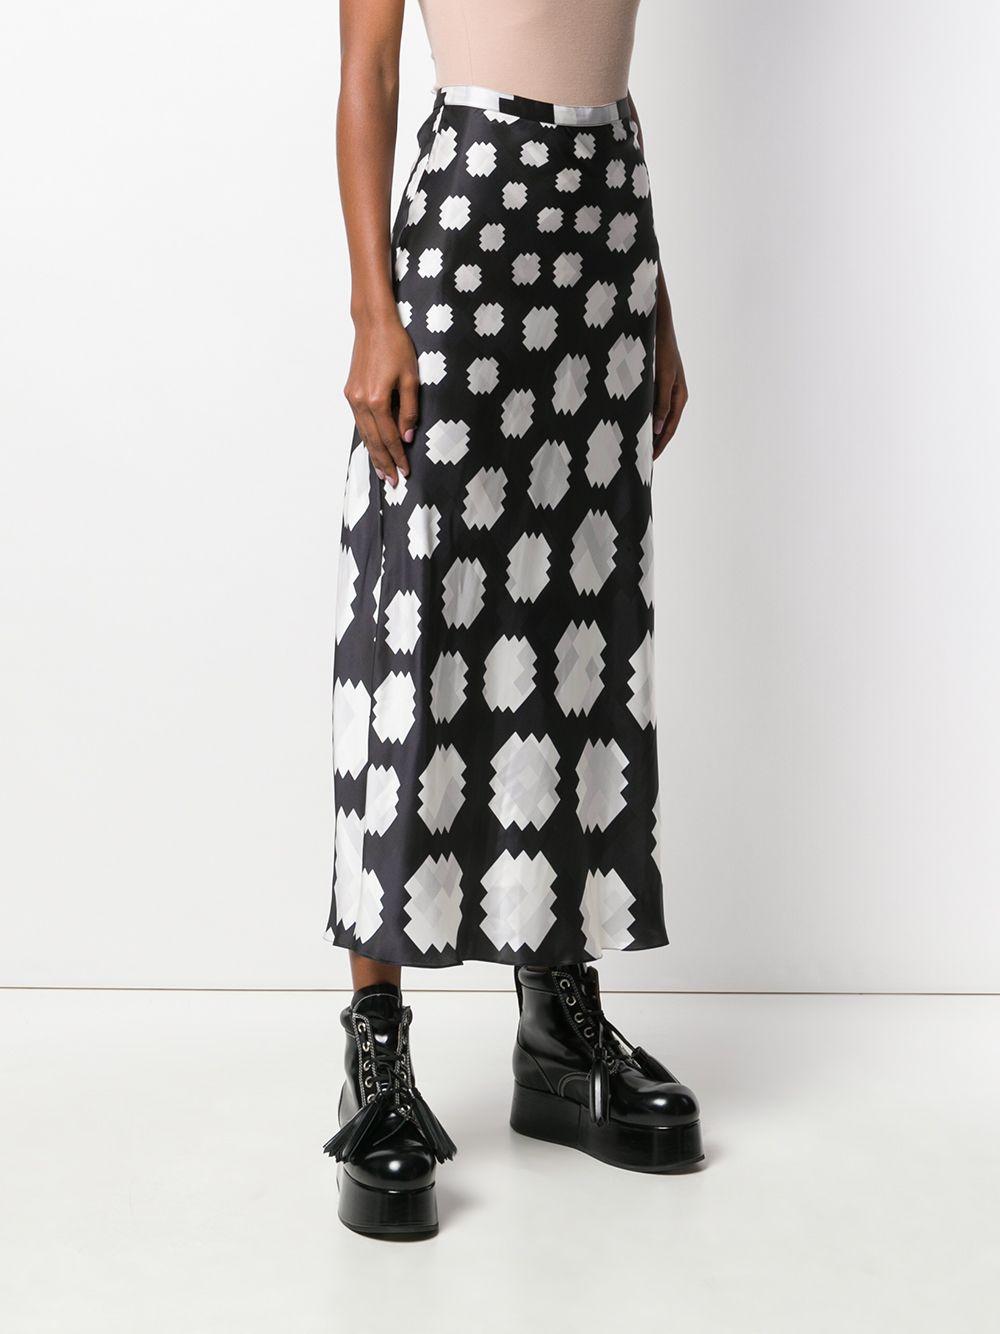 Marni Geometric Print Skirt in Black/White (Black) - Save 63% | Lyst